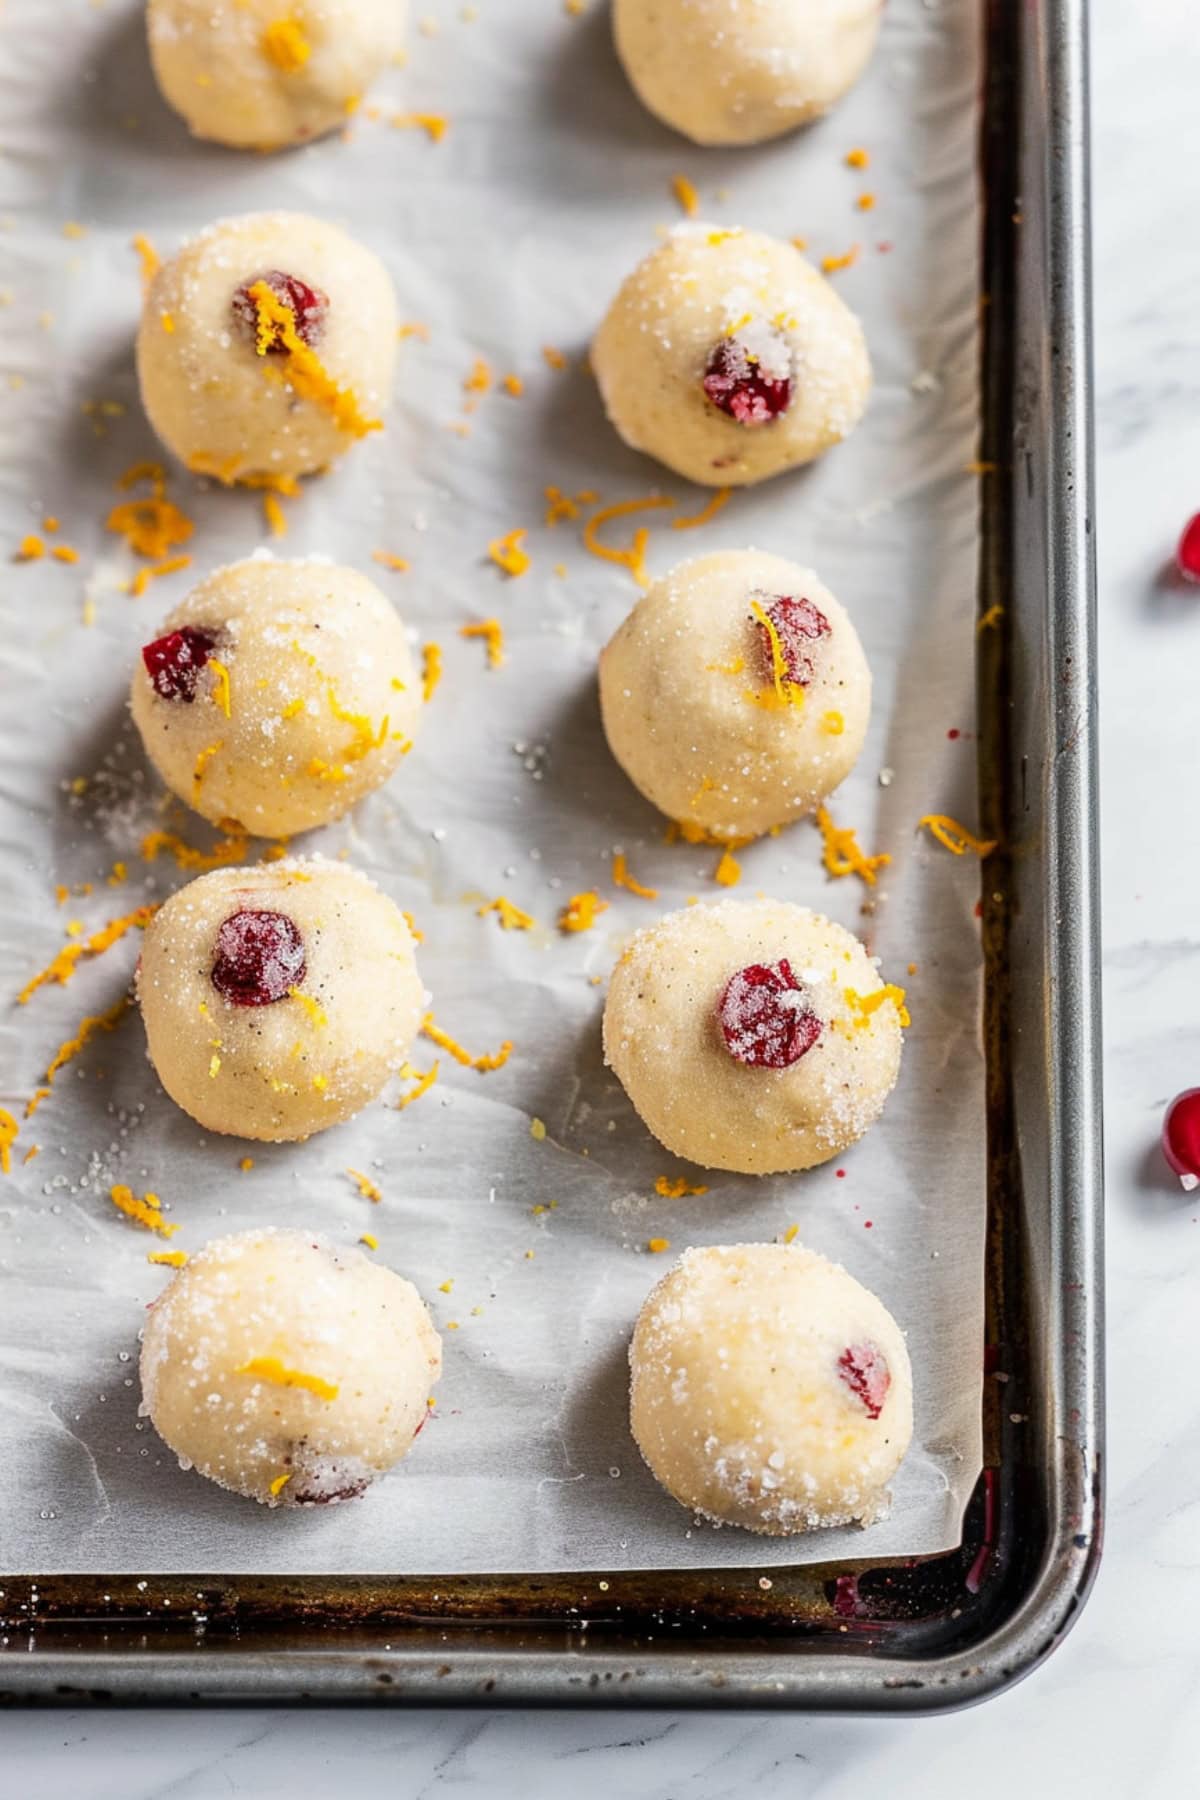 Cookie dough balls with cranberries.